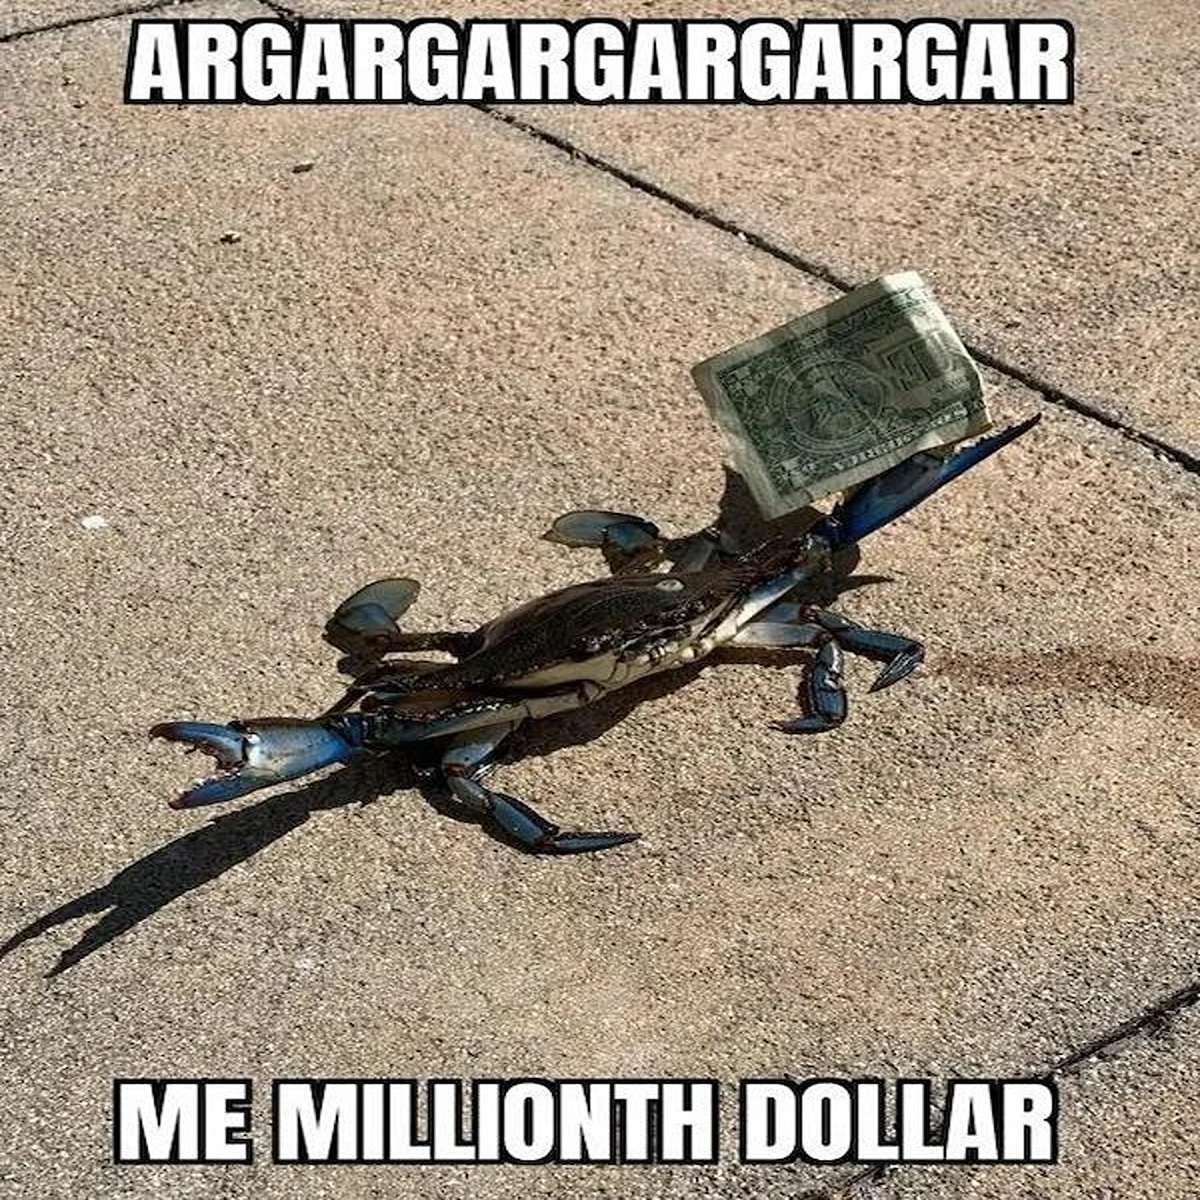 dank memes - gun - Argargargargargar Me Millionth Dollar